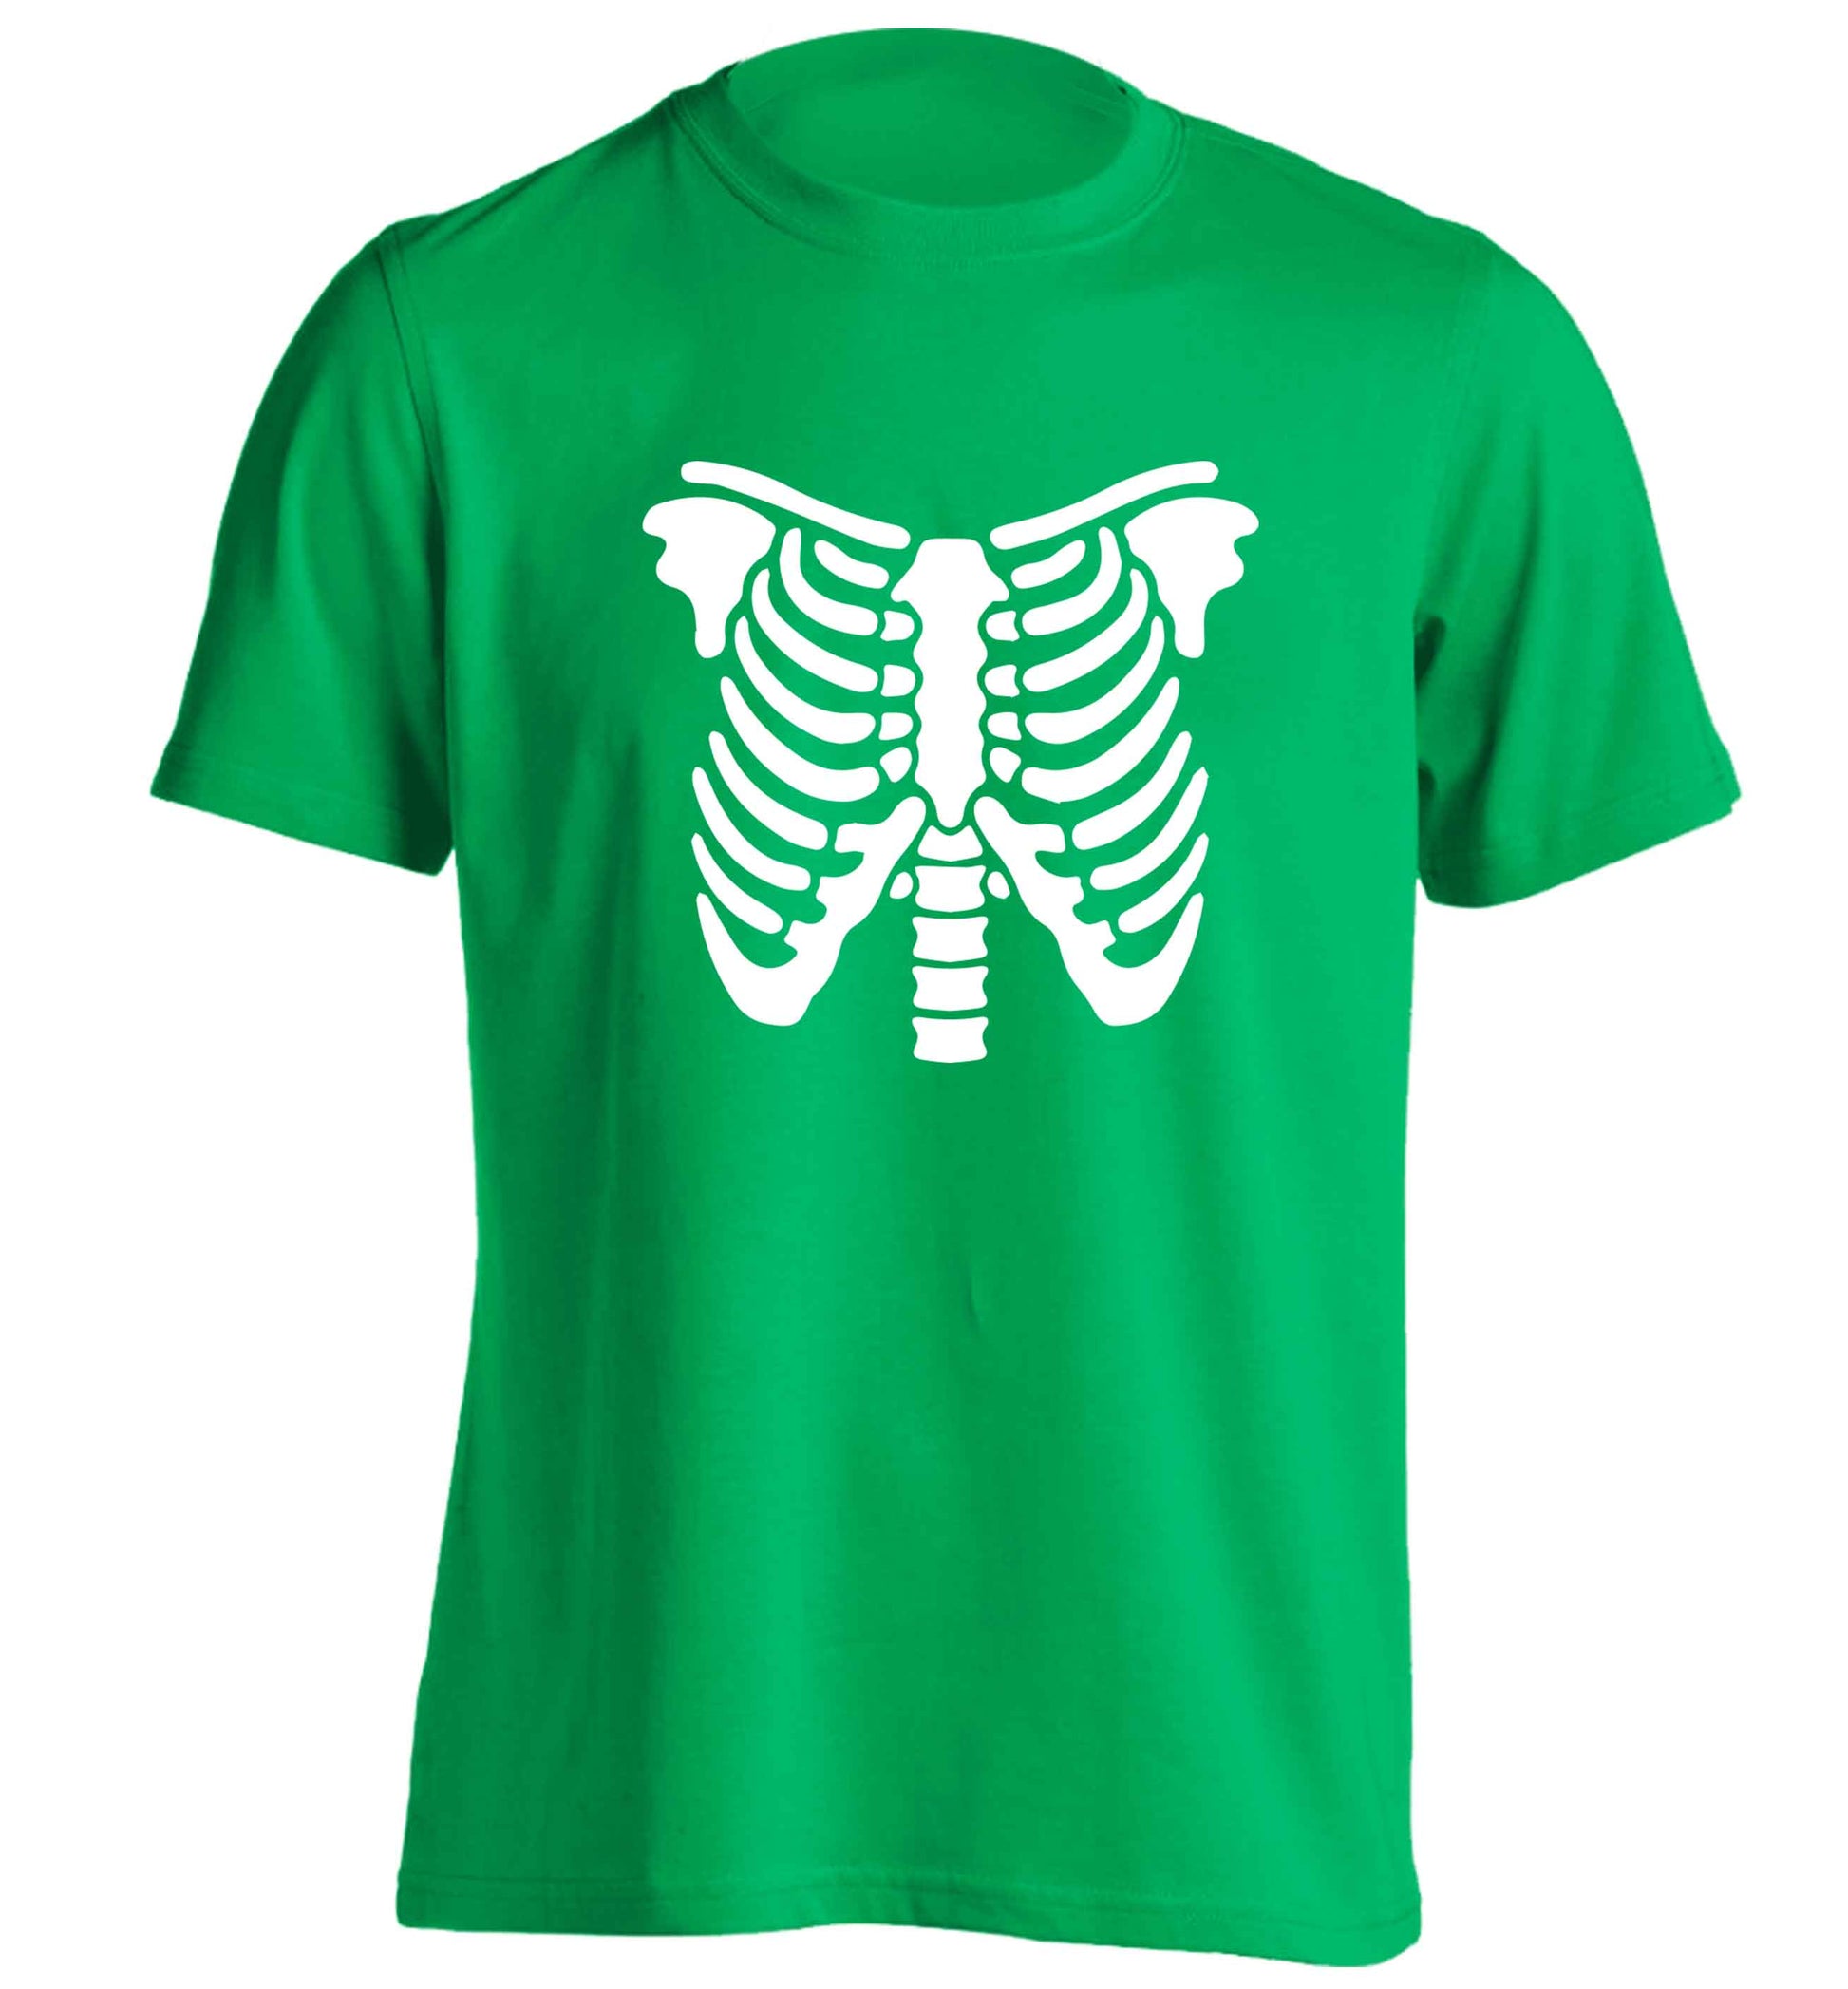 Skeleton ribcage adults unisex green Tshirt 2XL